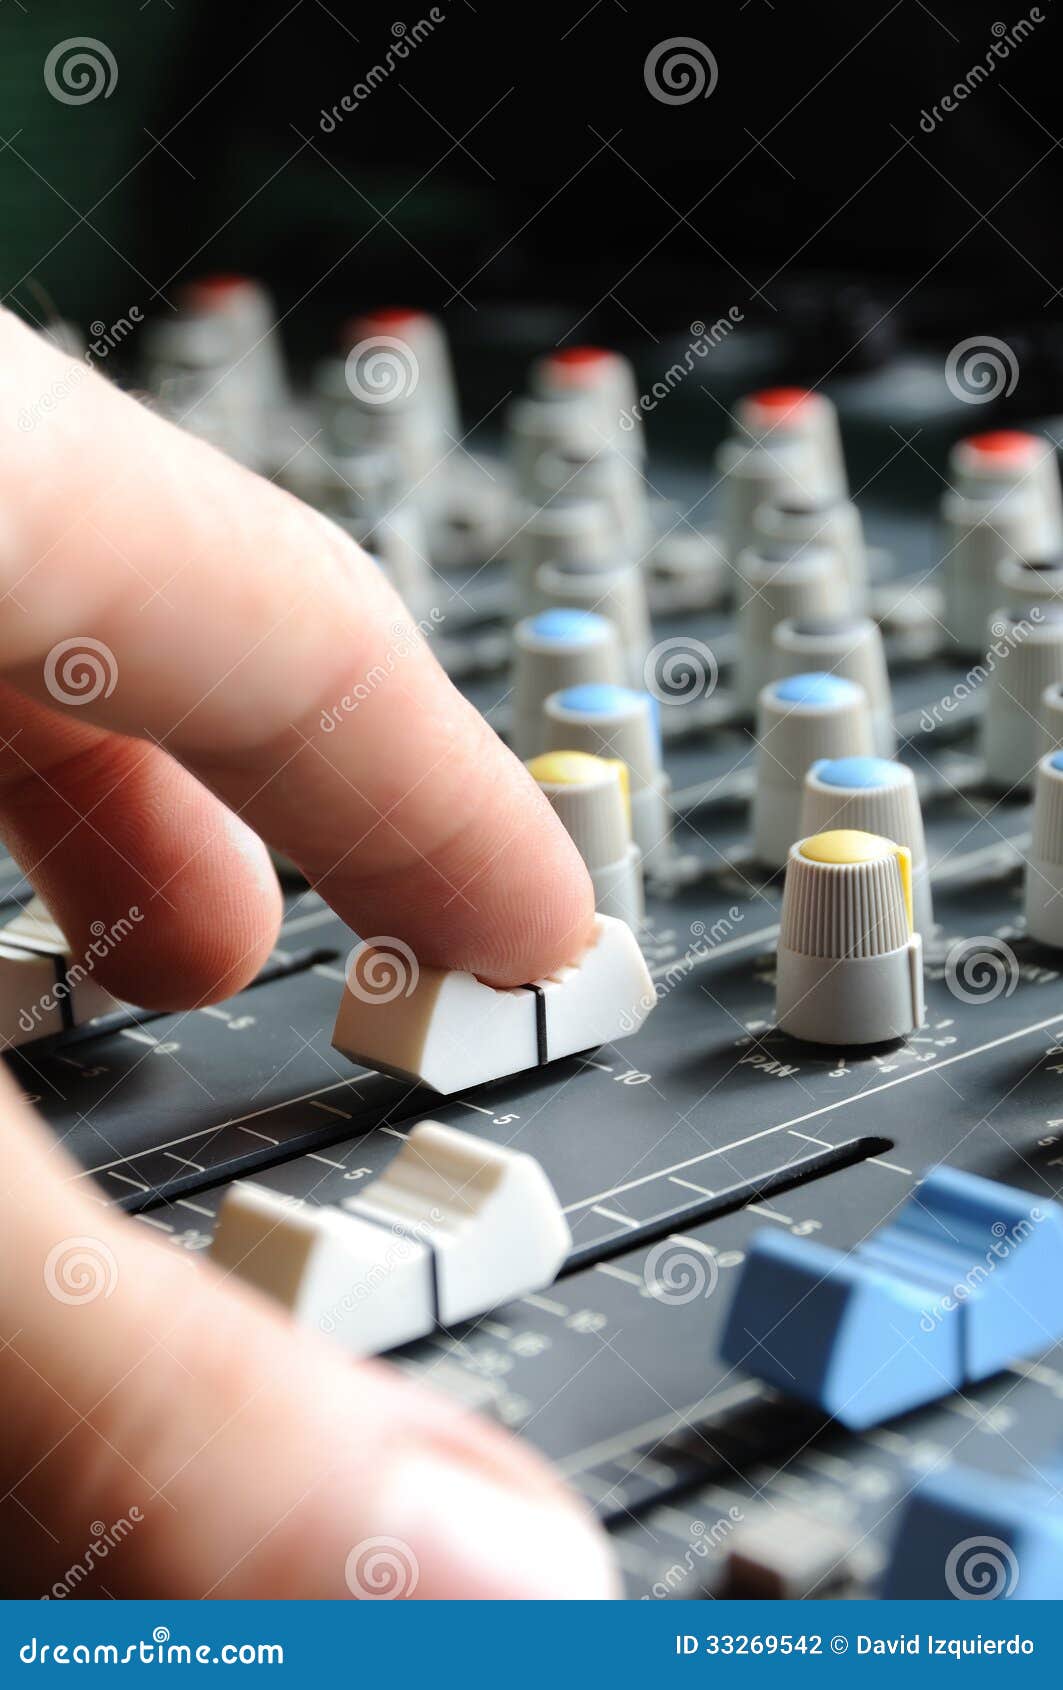 man adjusting audio mixer